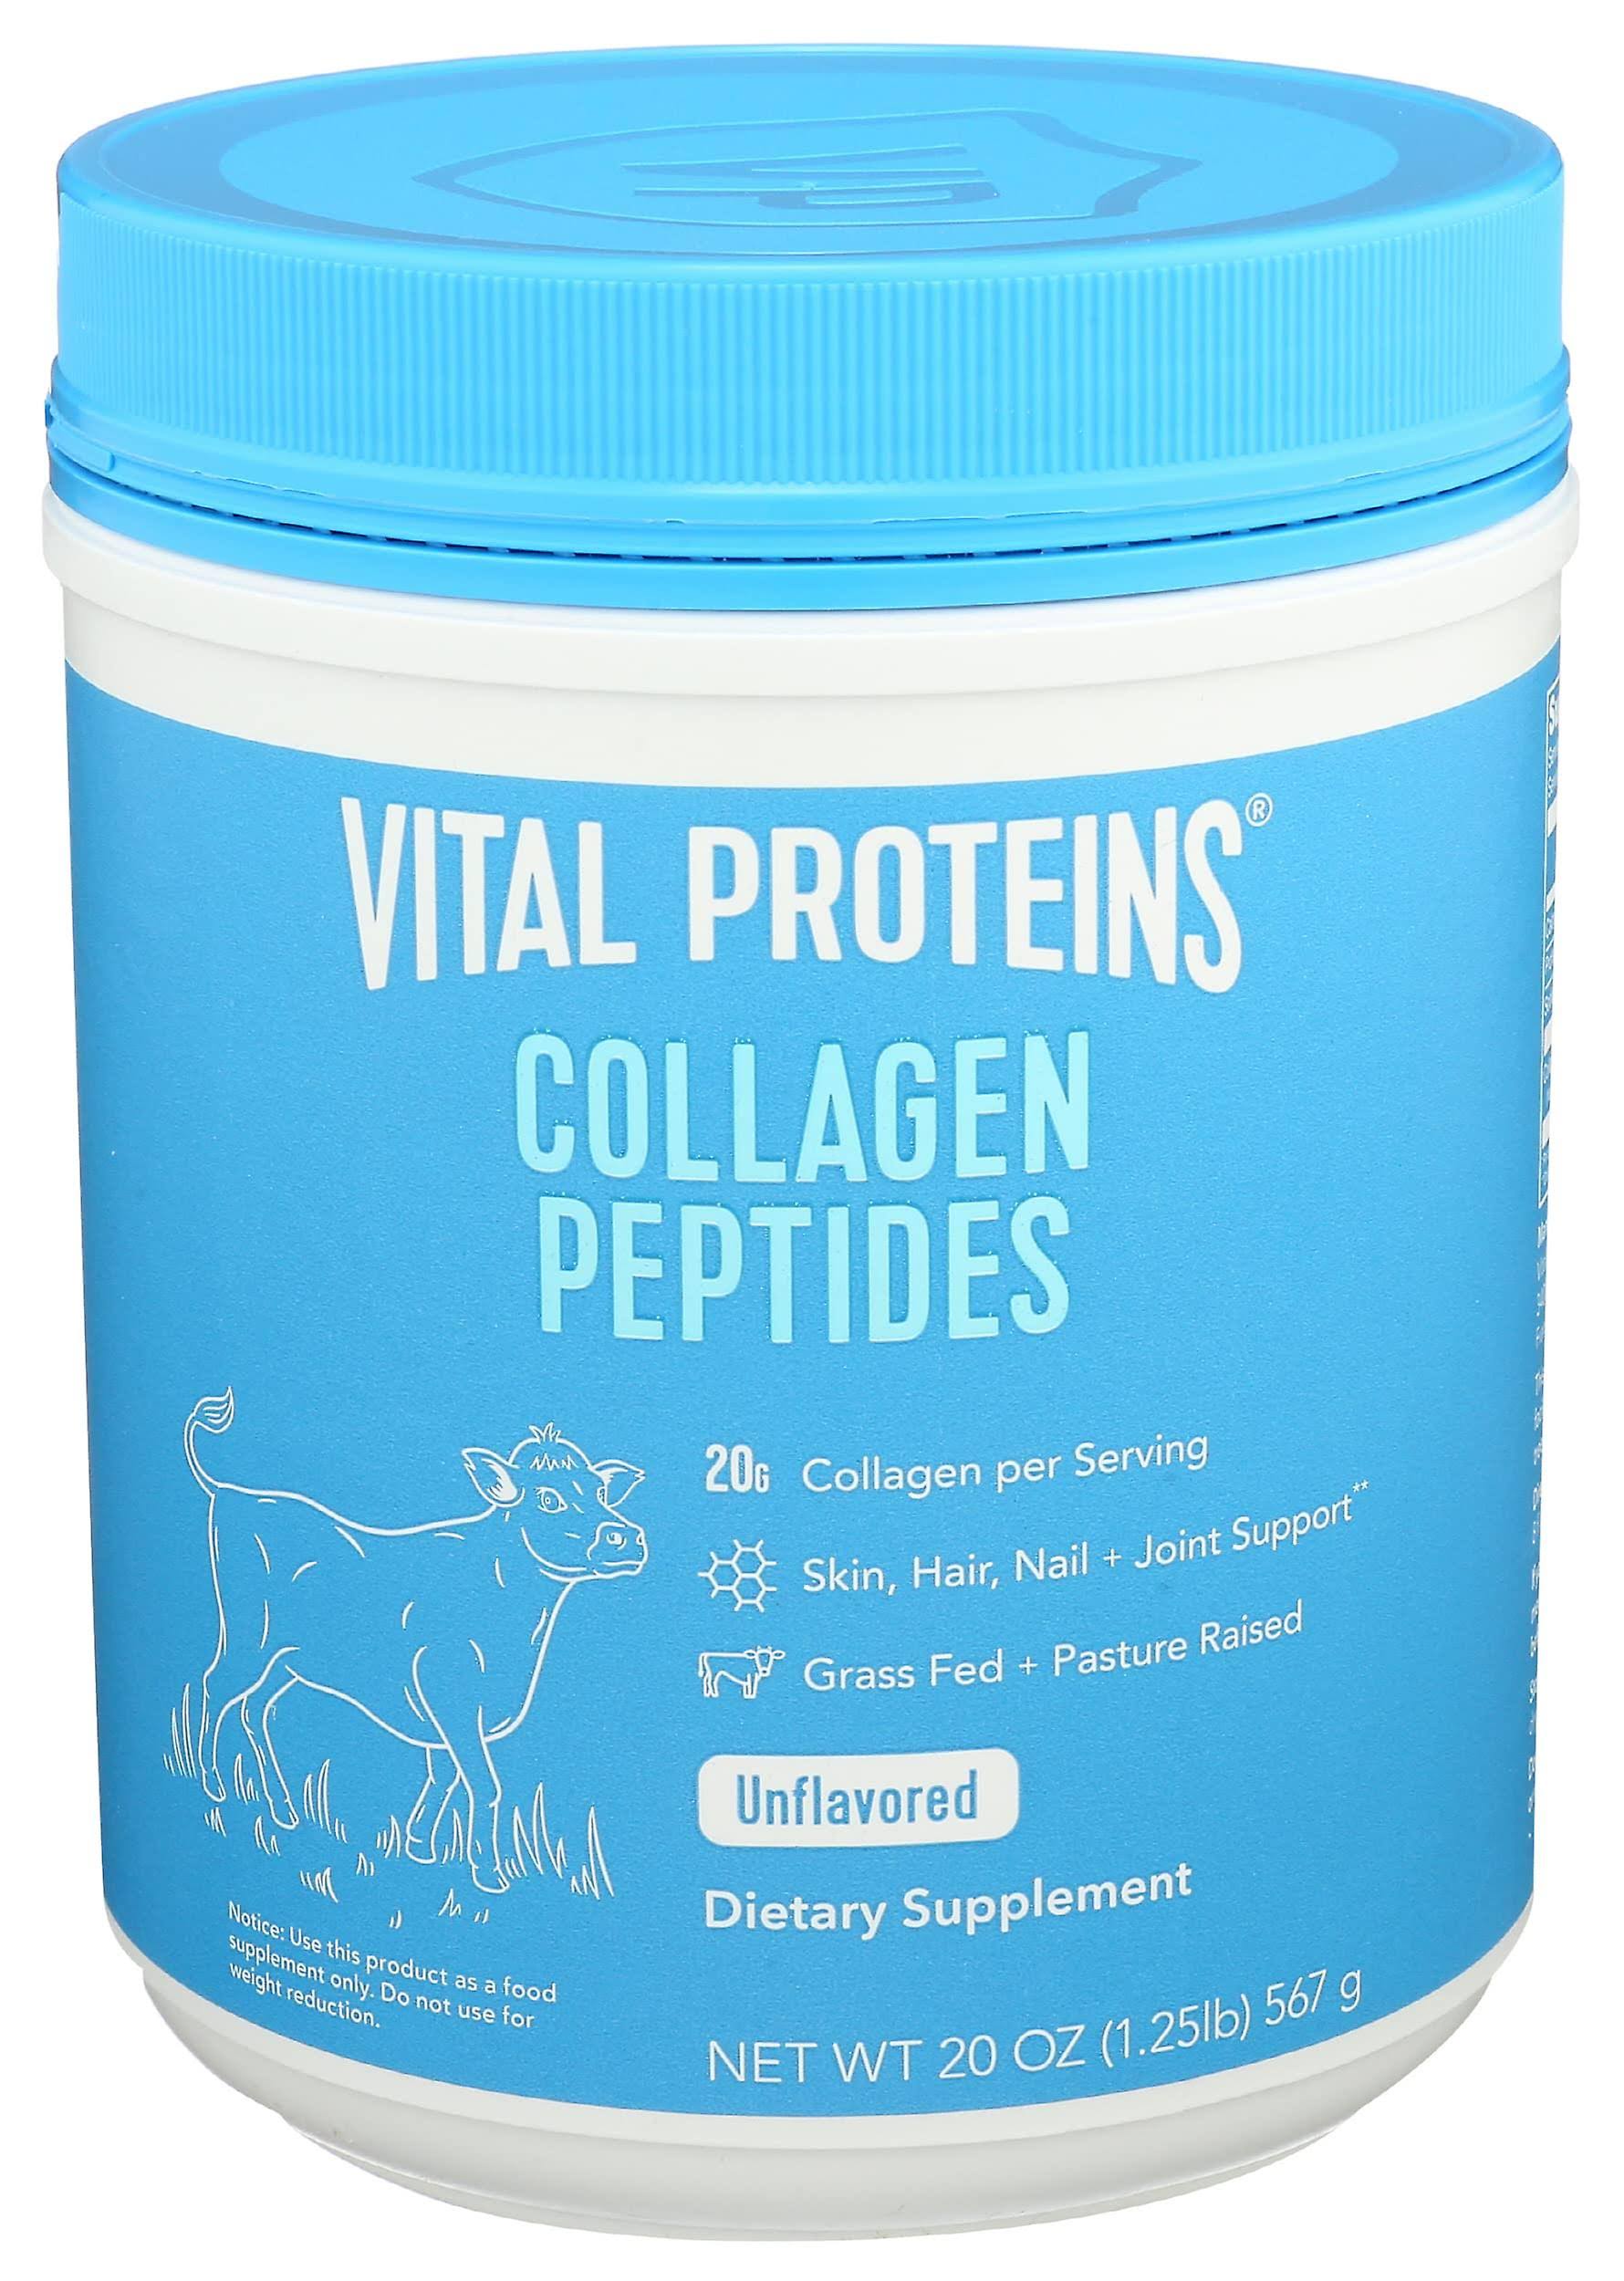 Vital Proteins Pasture-Raised Collagen Peptides - 567g